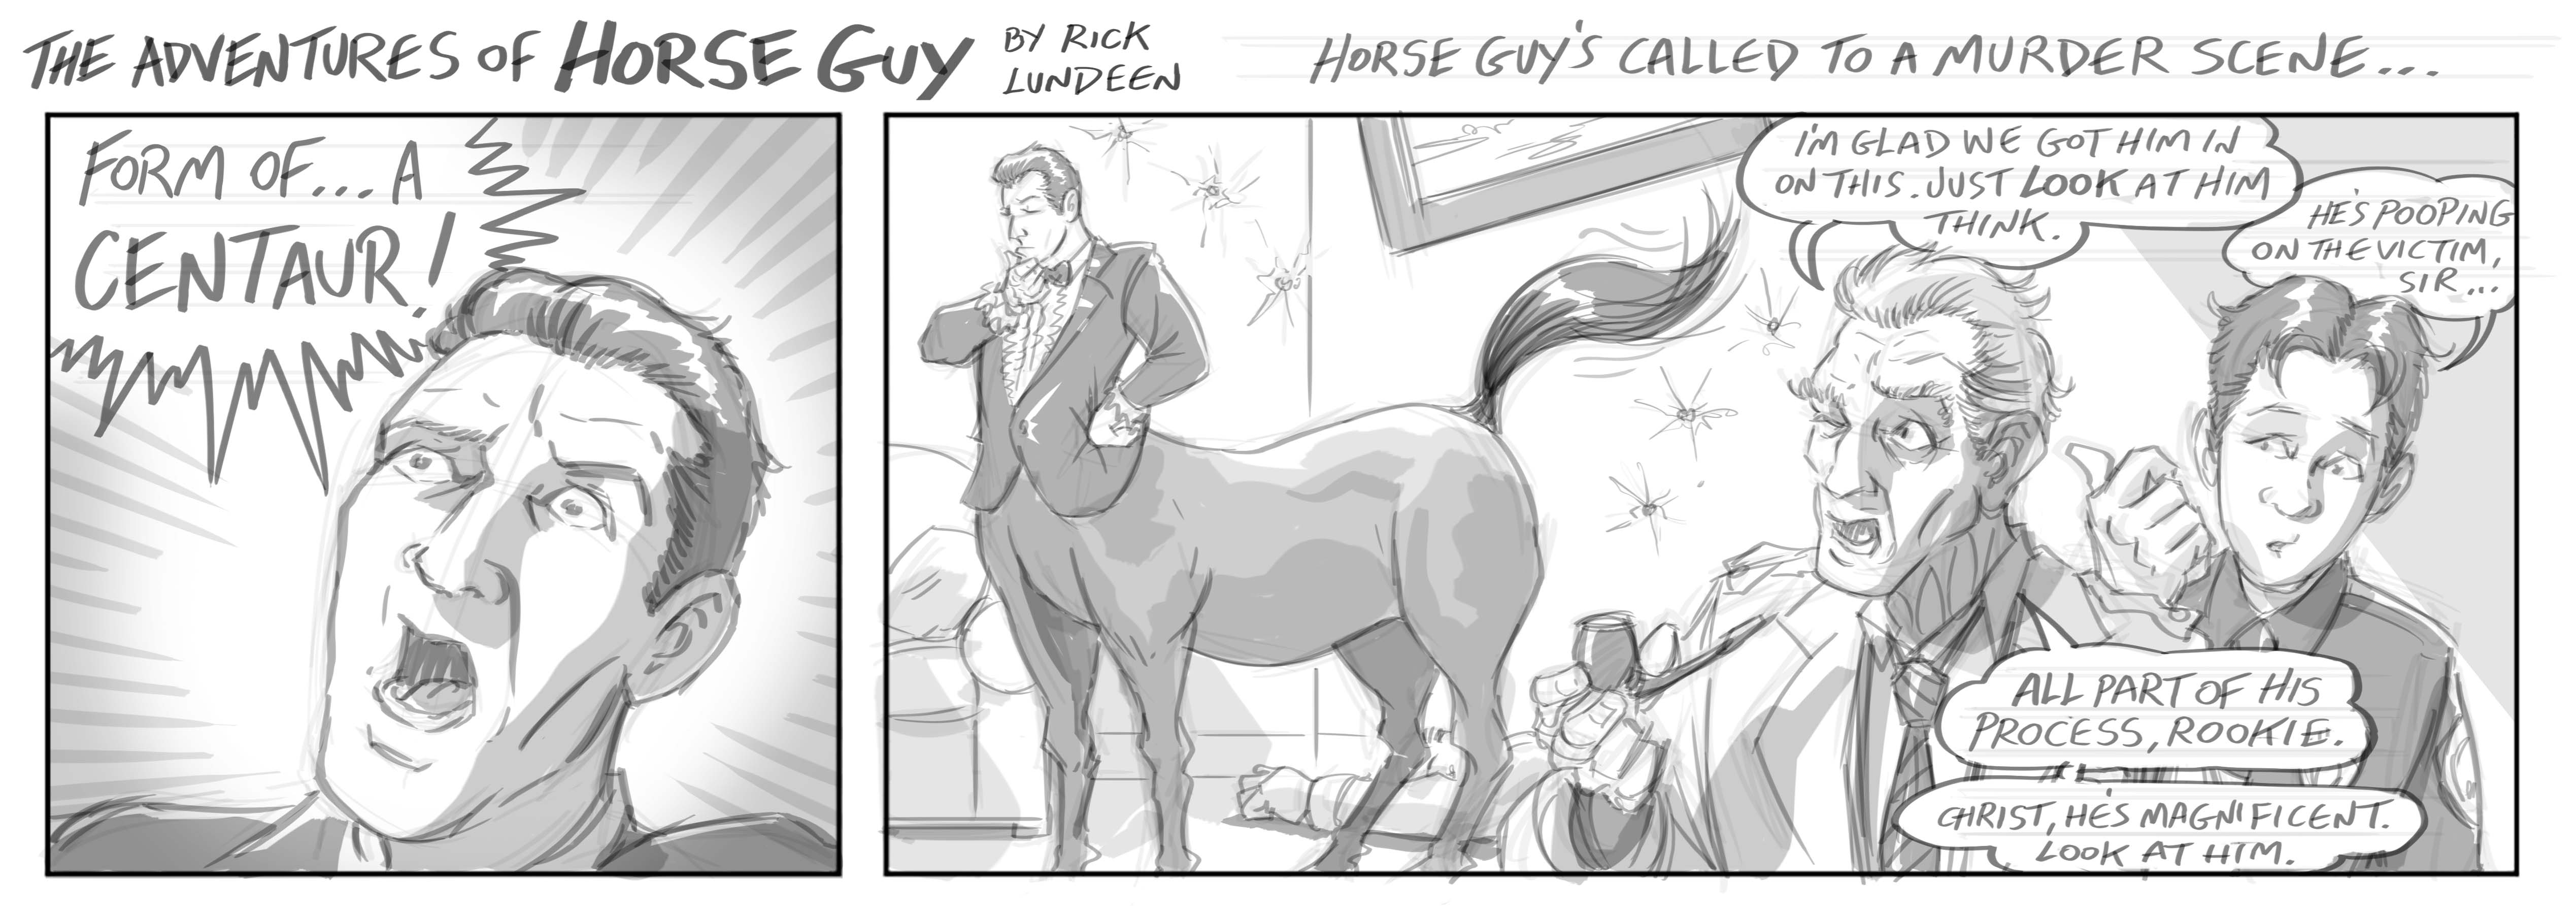 Horse Guy 4 final